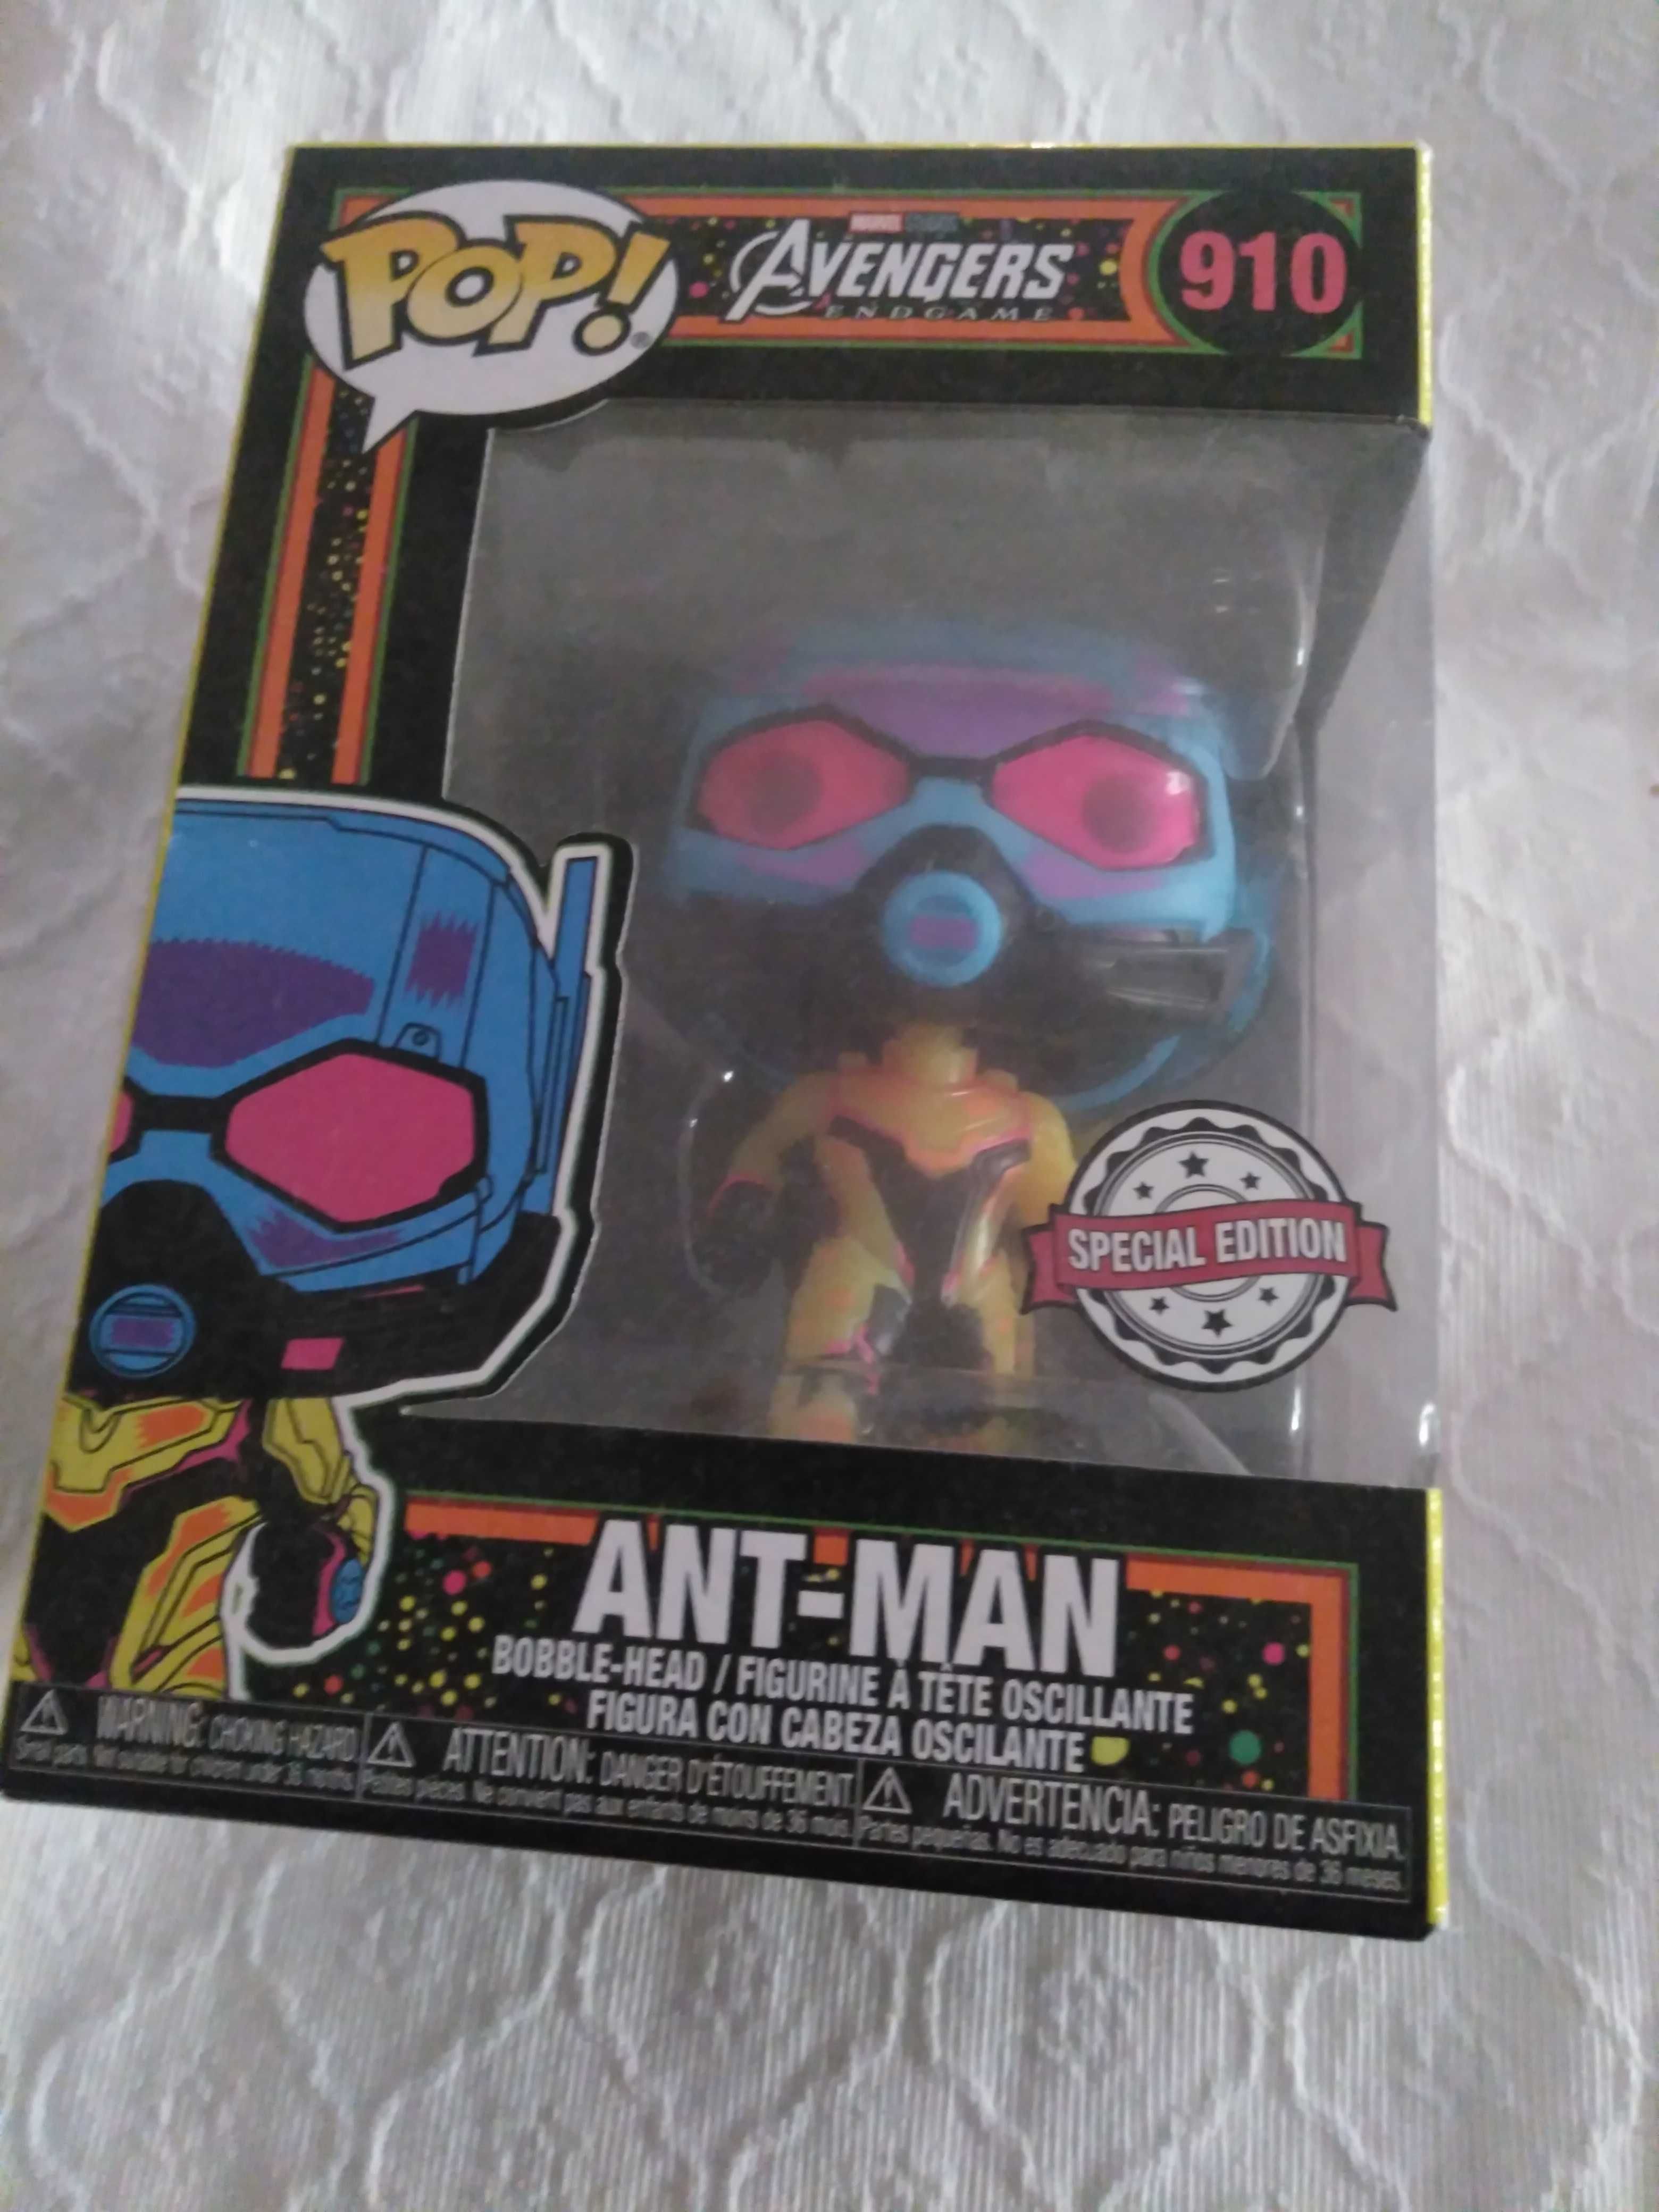 Funko pop 910 Avengers Ant-Man